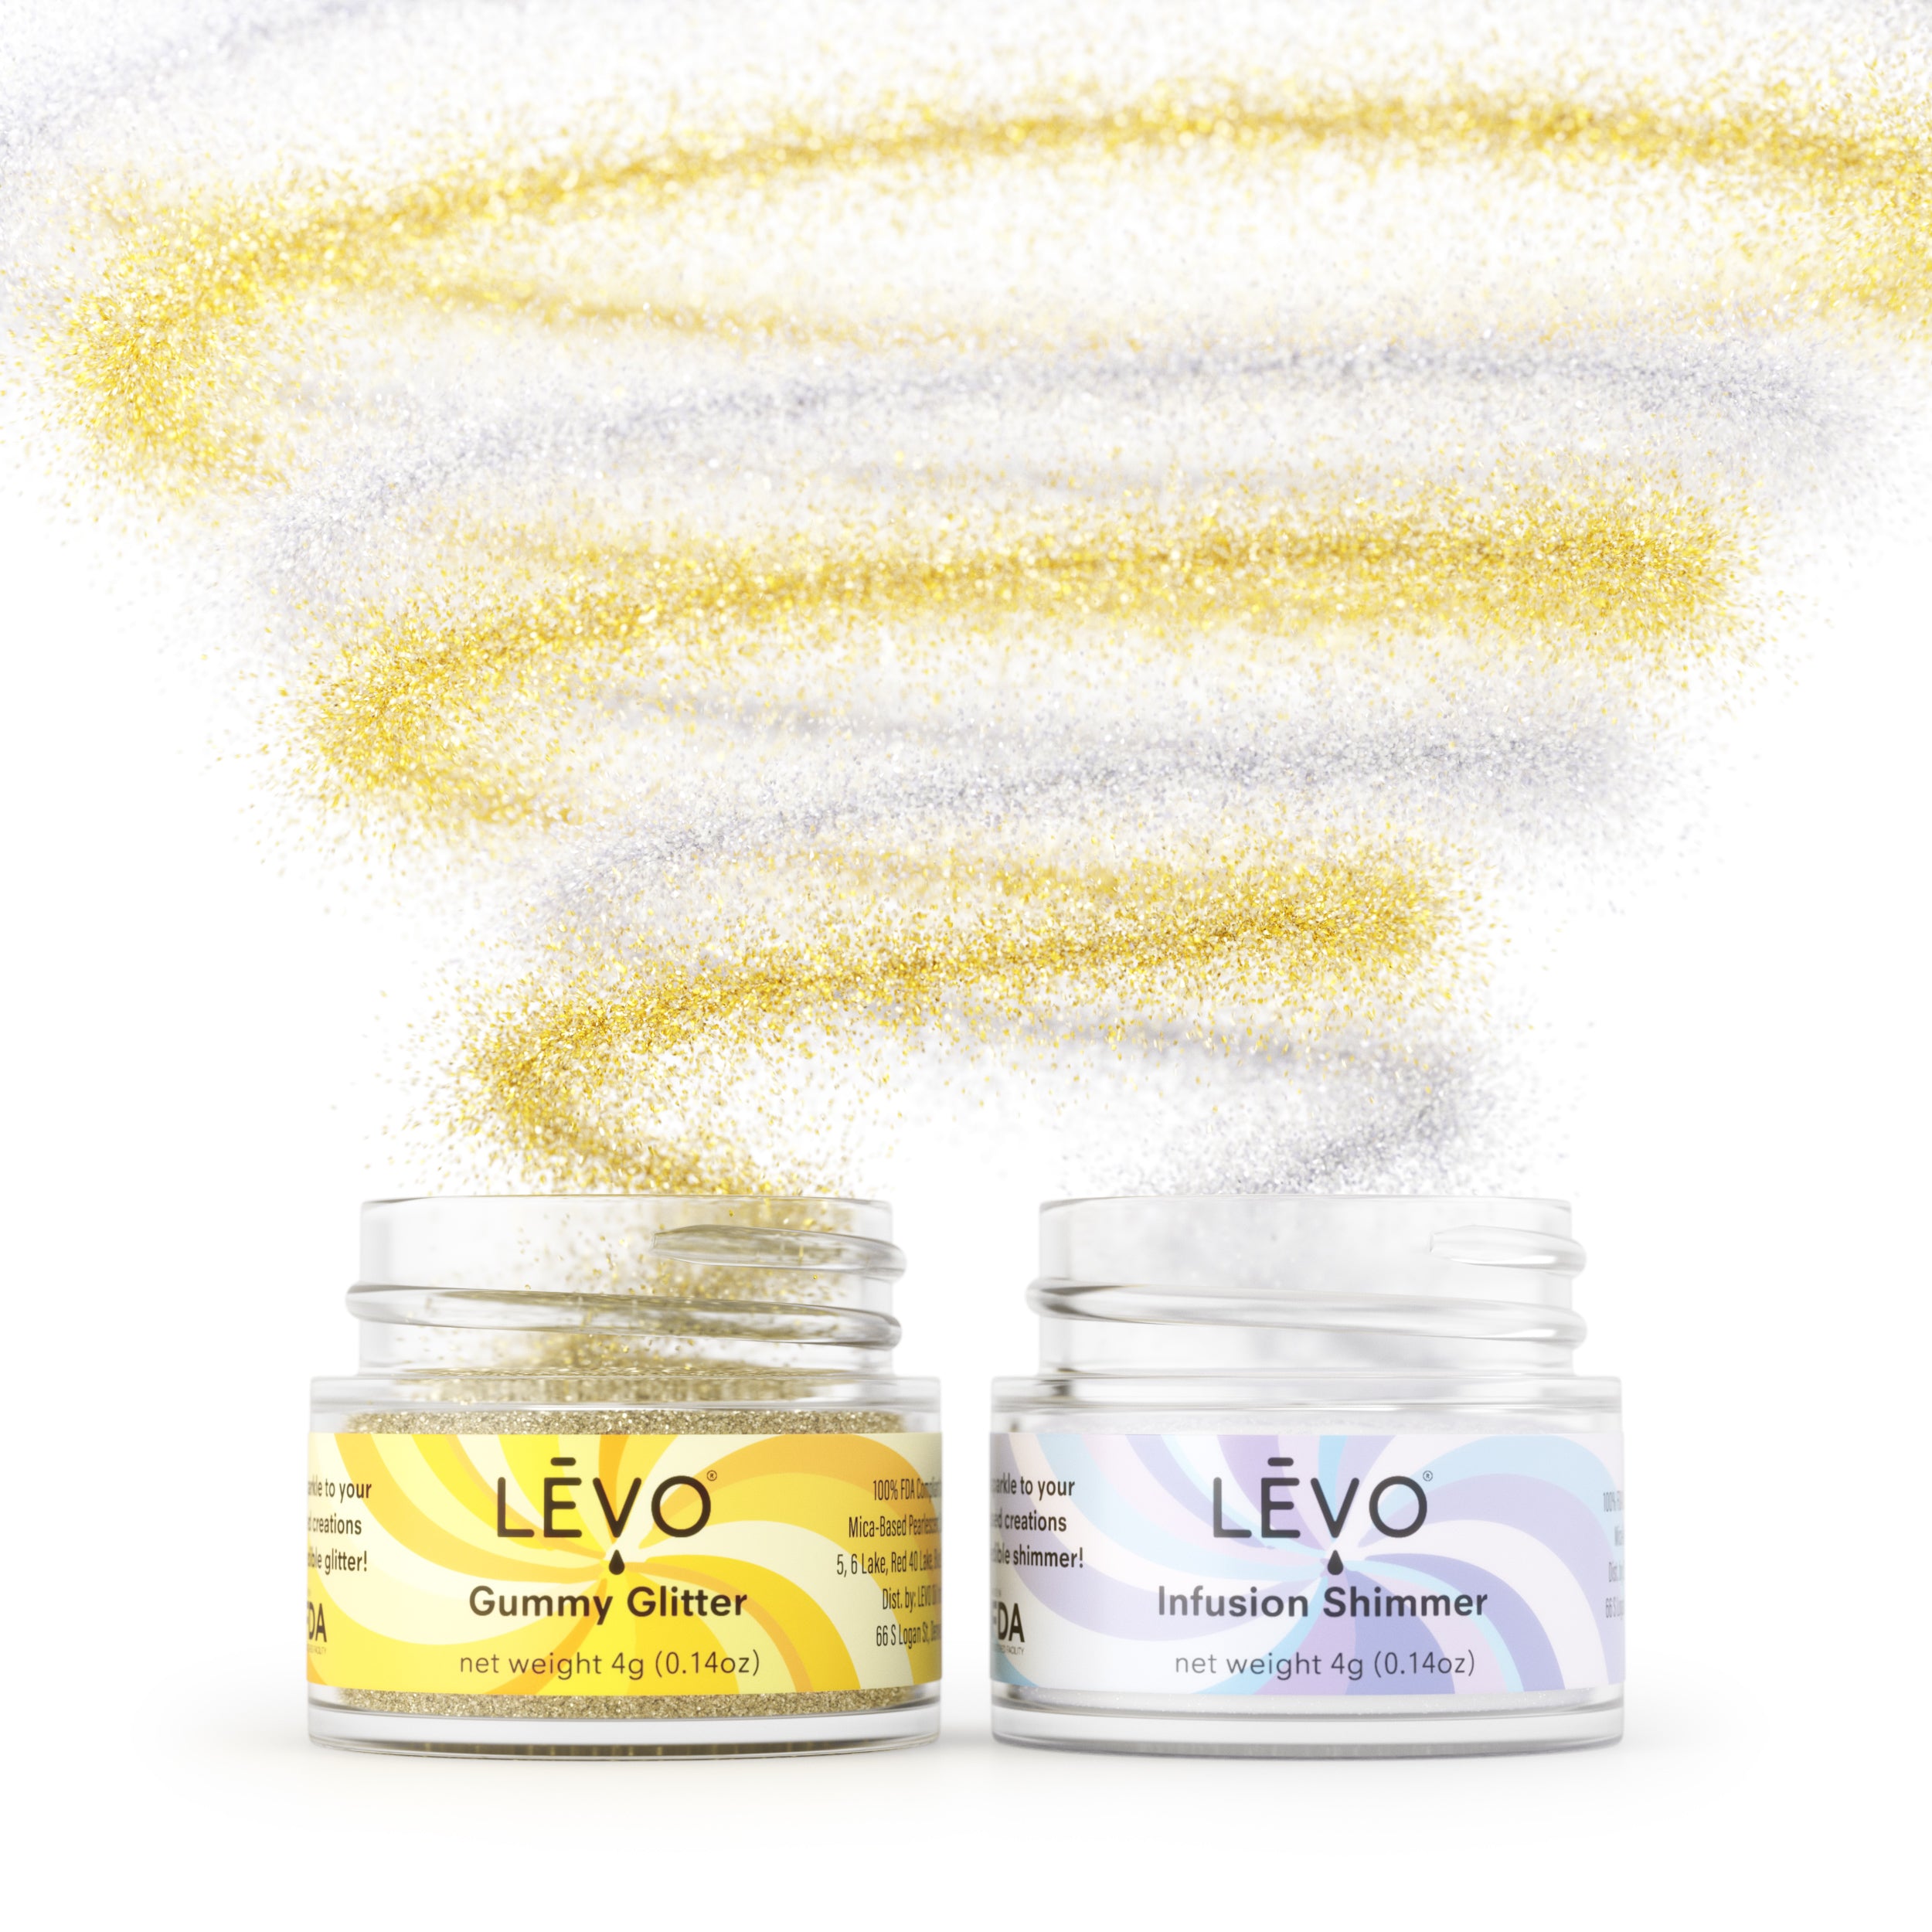 LEVO gummy glitter and LEVO infusion shimmer edible glitter to decorate gummy edibles